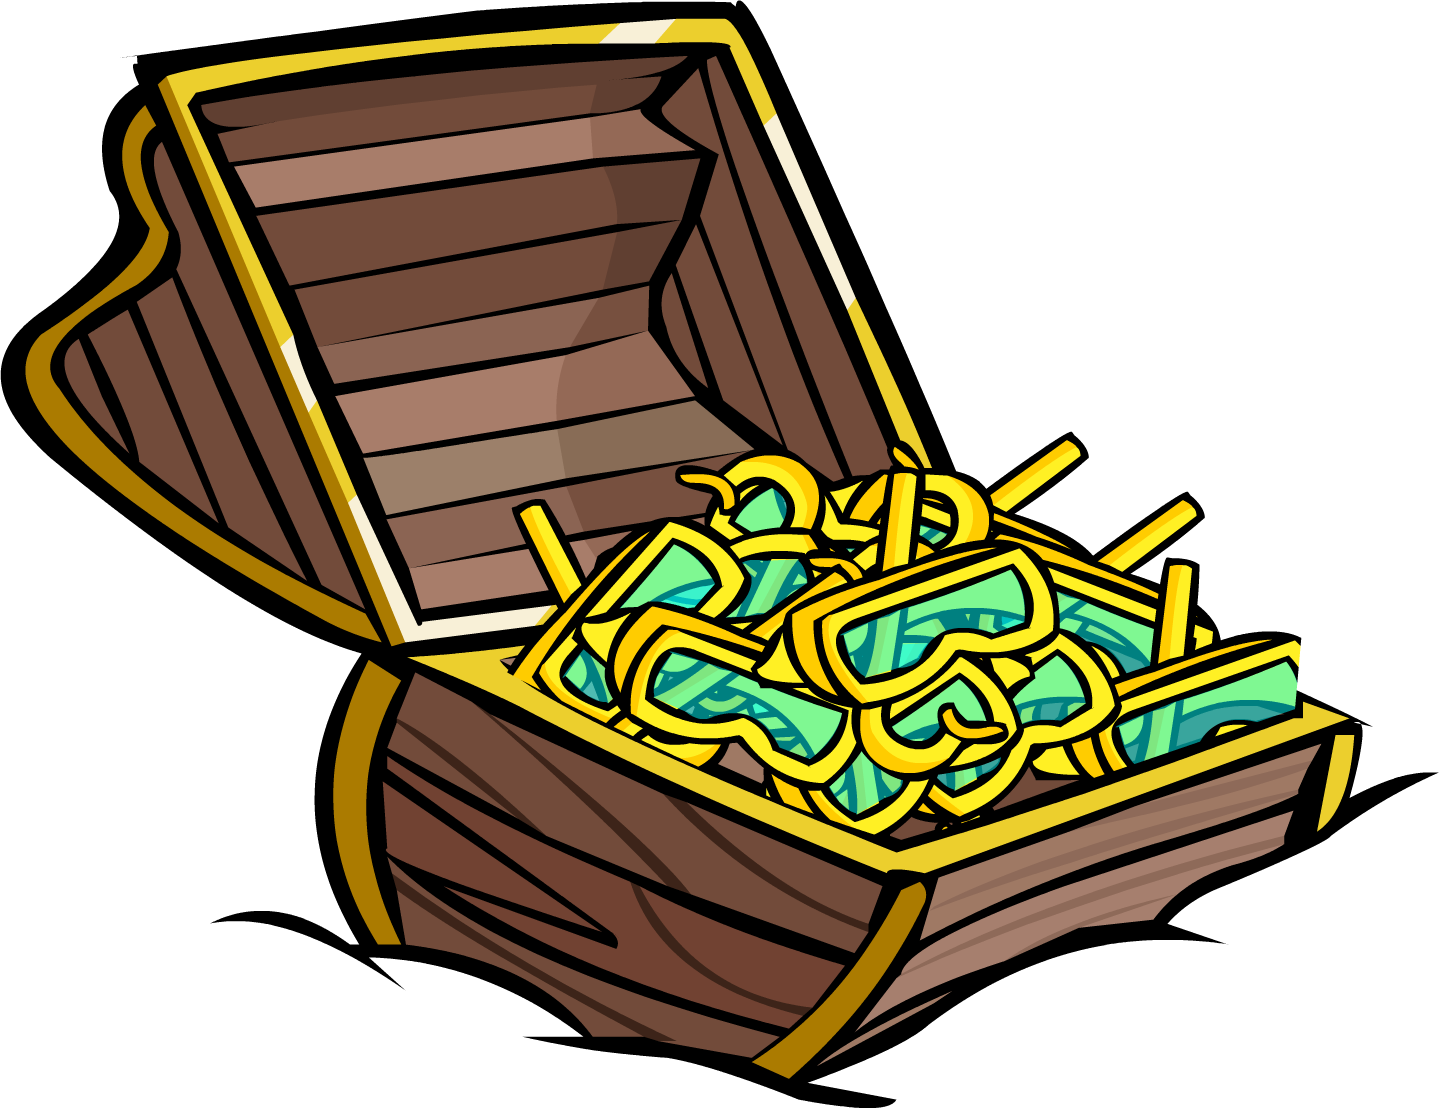 Yellow Snorkel Treasure Chest - Club Penguin Free Items (1439x1108)